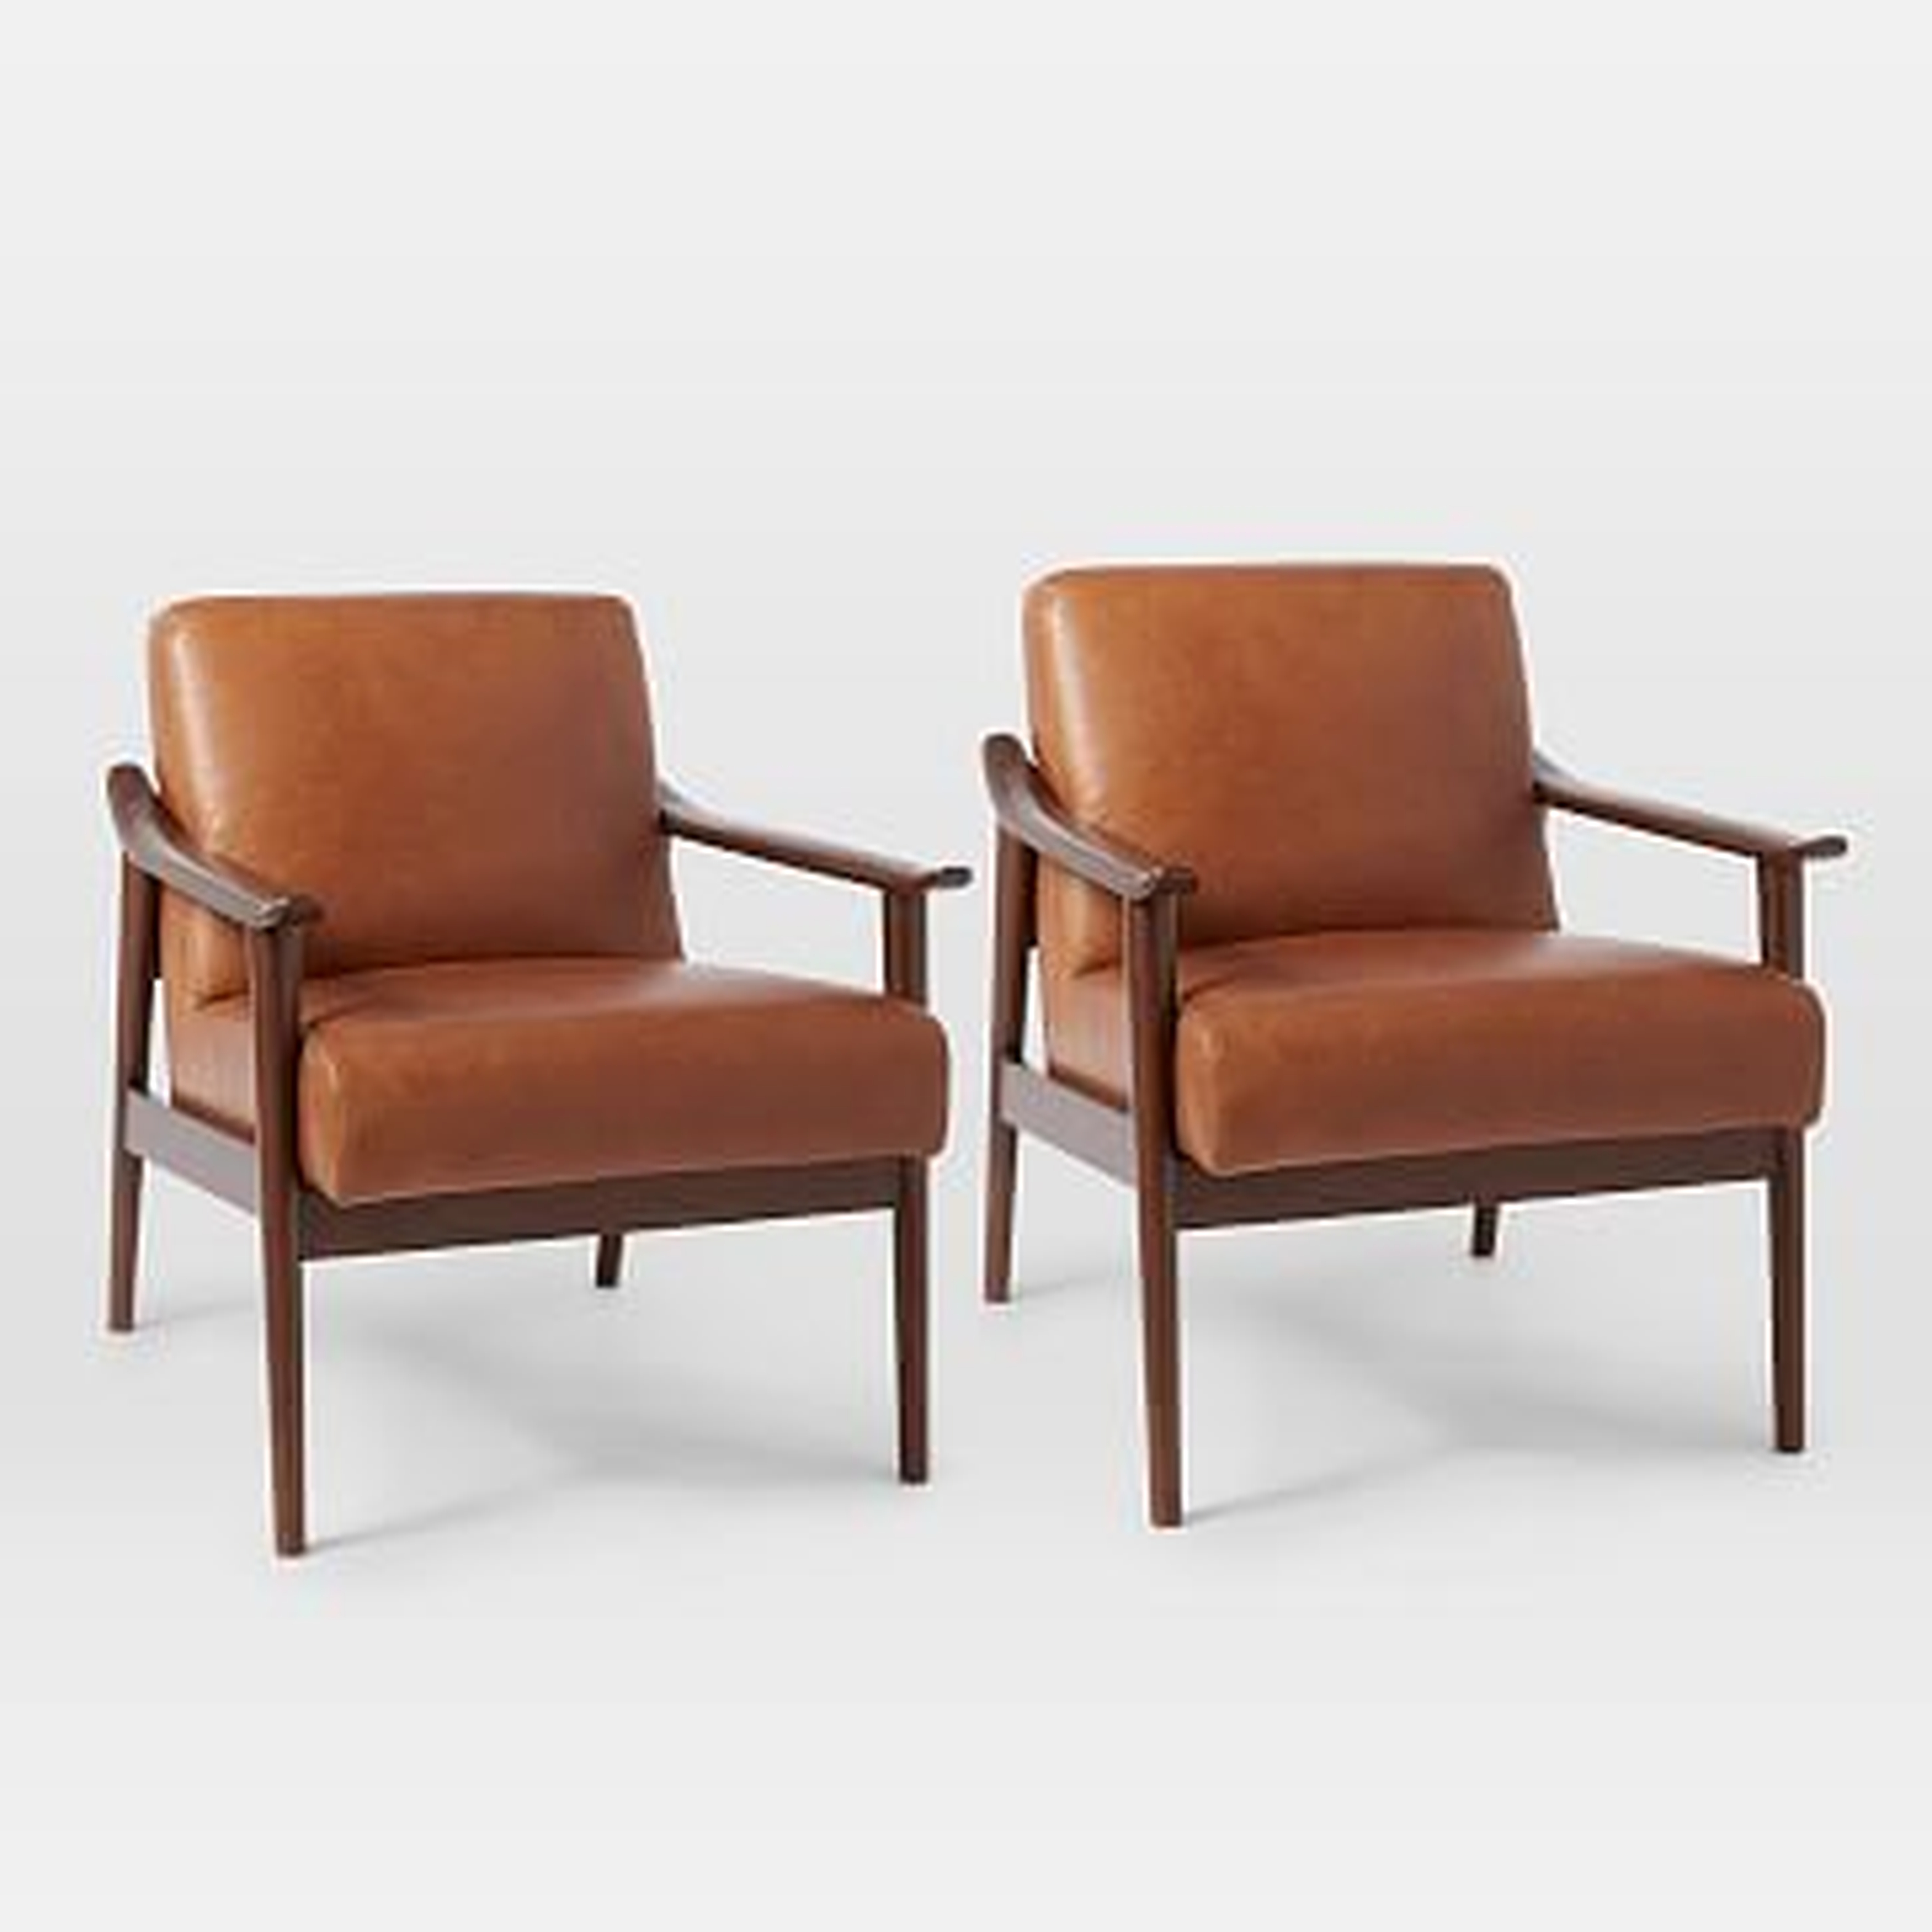 Midcentury Show Wood Leather Chair, Saddle/Espresso, Set of 2 - West Elm